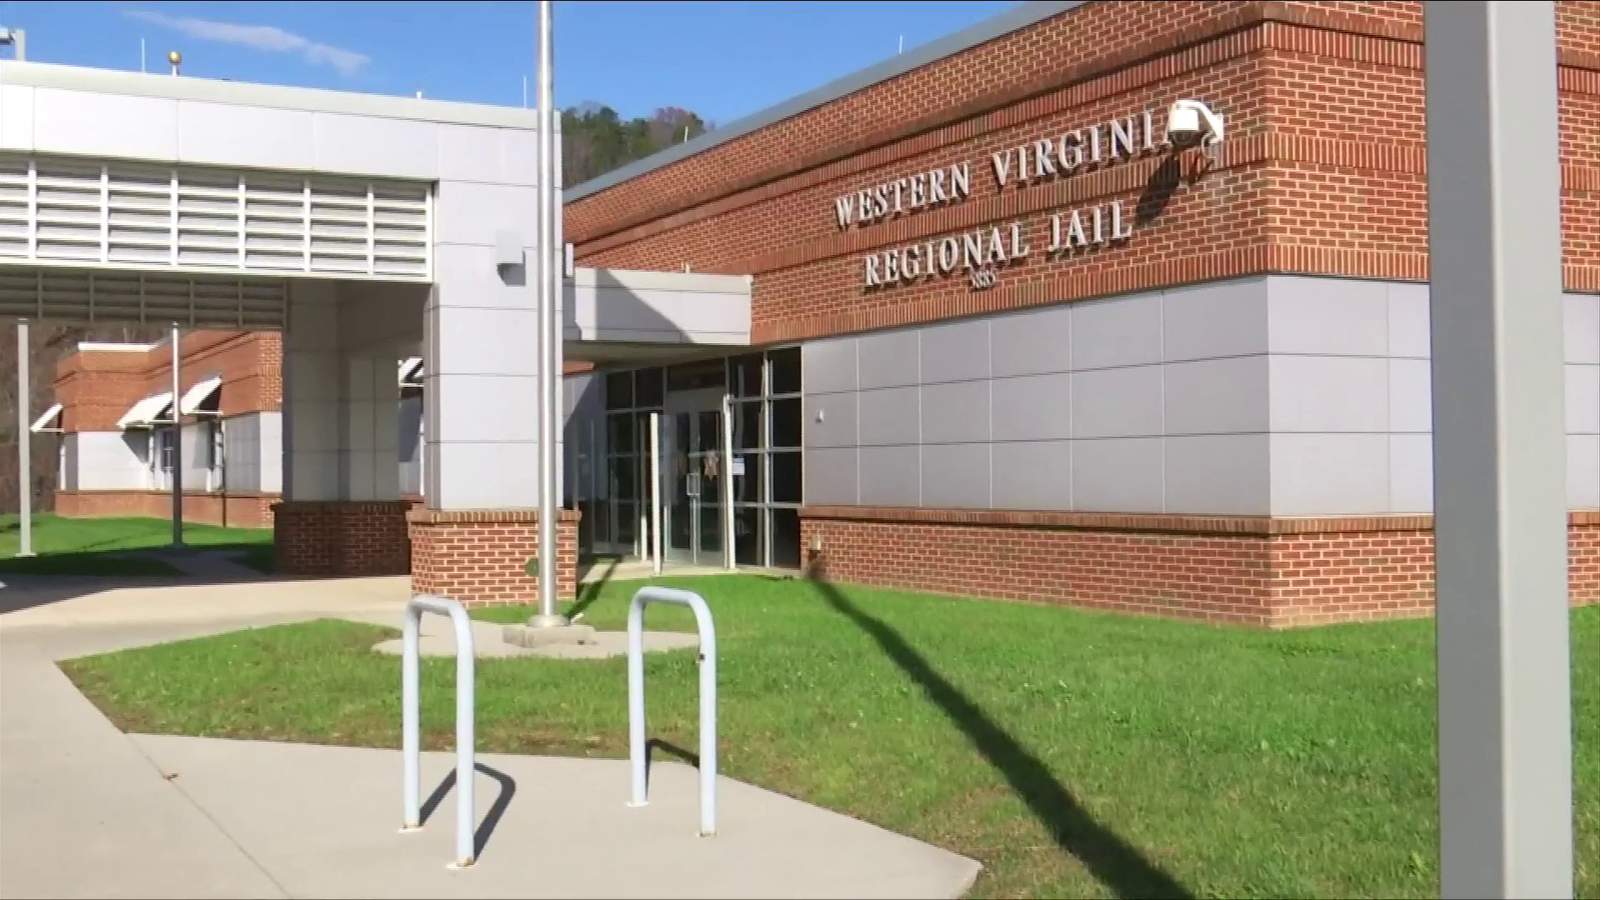 Western Virginia Regional Jail undergoes mass coronavirus testing after outbreak